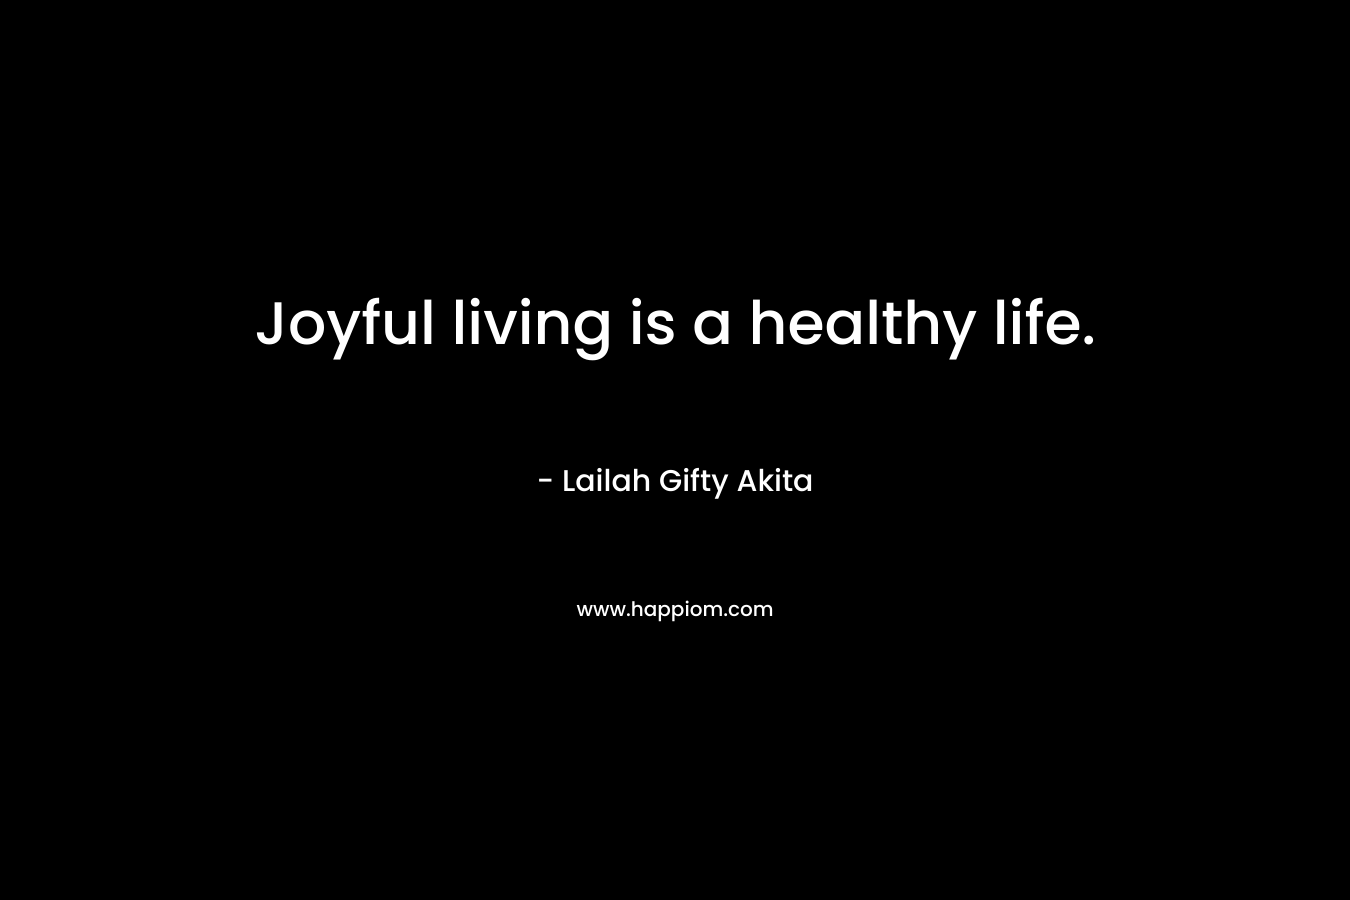 Joyful living is a healthy life.